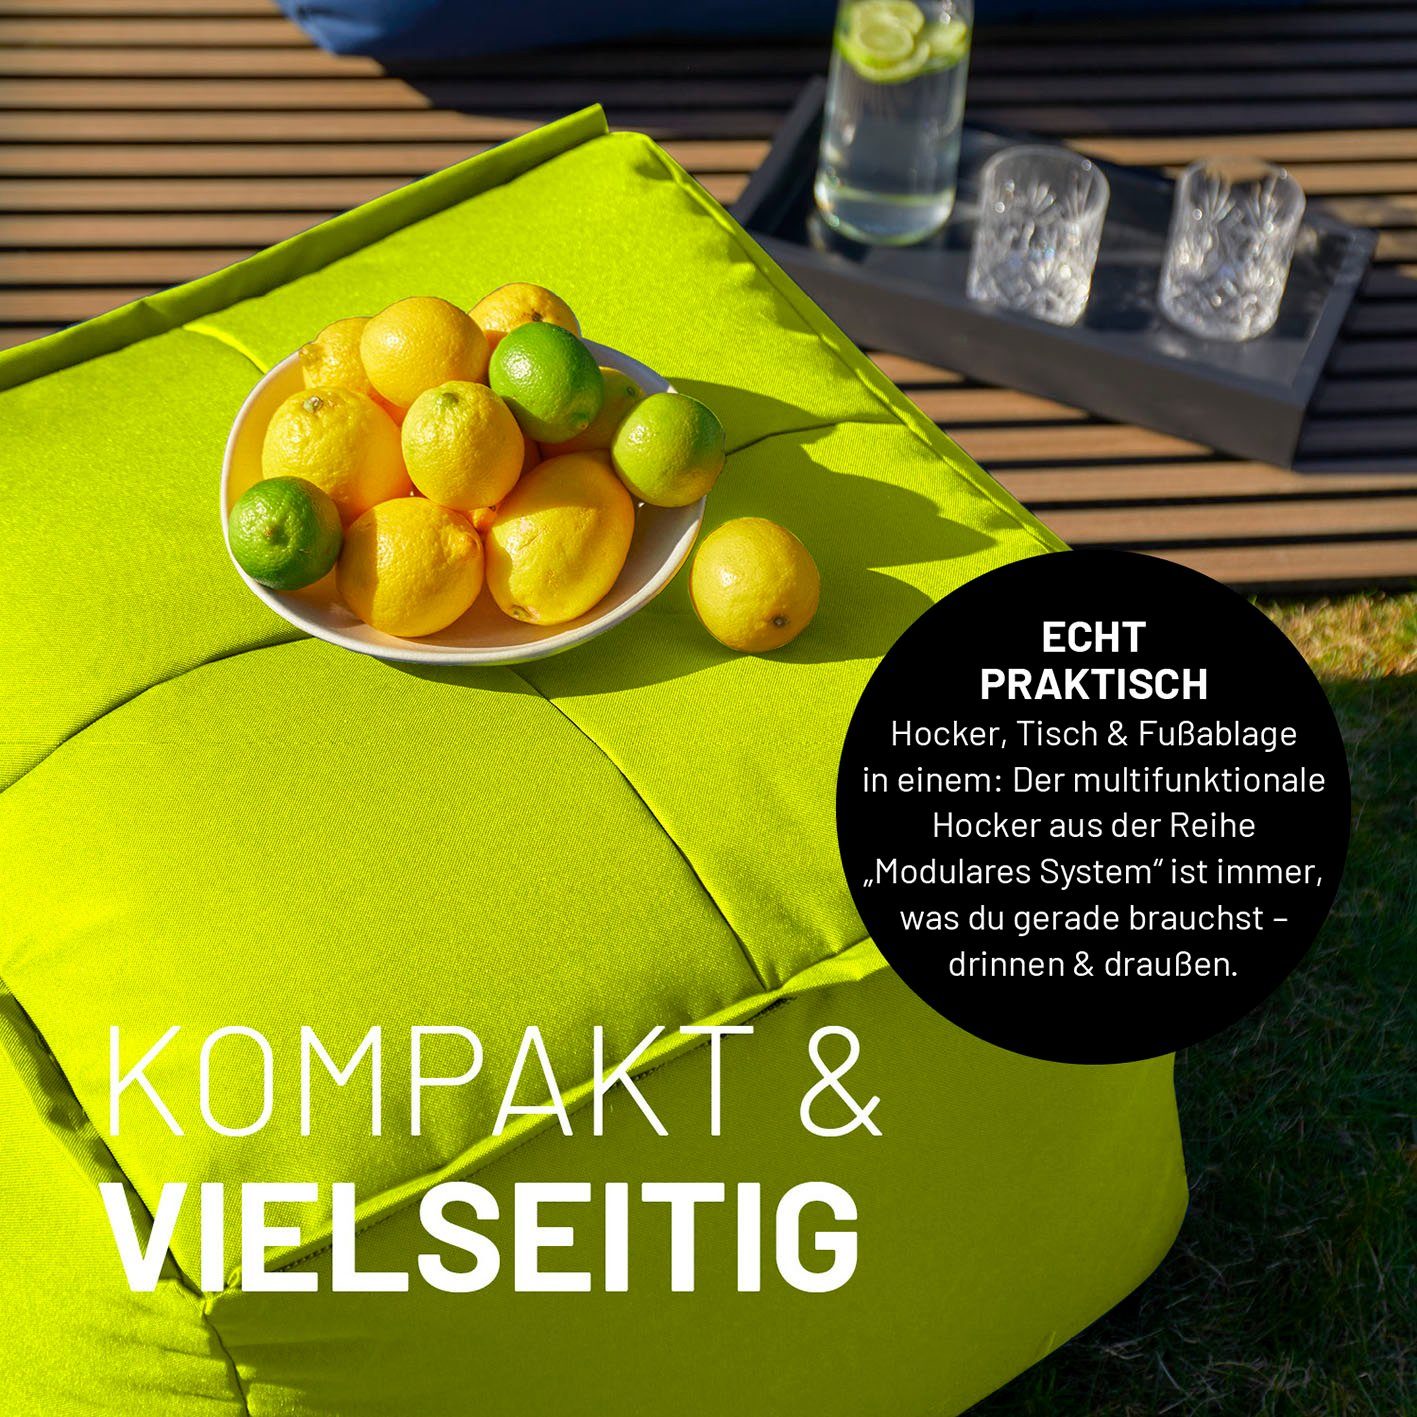 Lumaland Loungeset In- apfelgrün outdoor dem Modularen Sofa wasserfest waschbar & erweiterbar System, kombinierbar Sessel Bezug abnehmbarer mit individuell